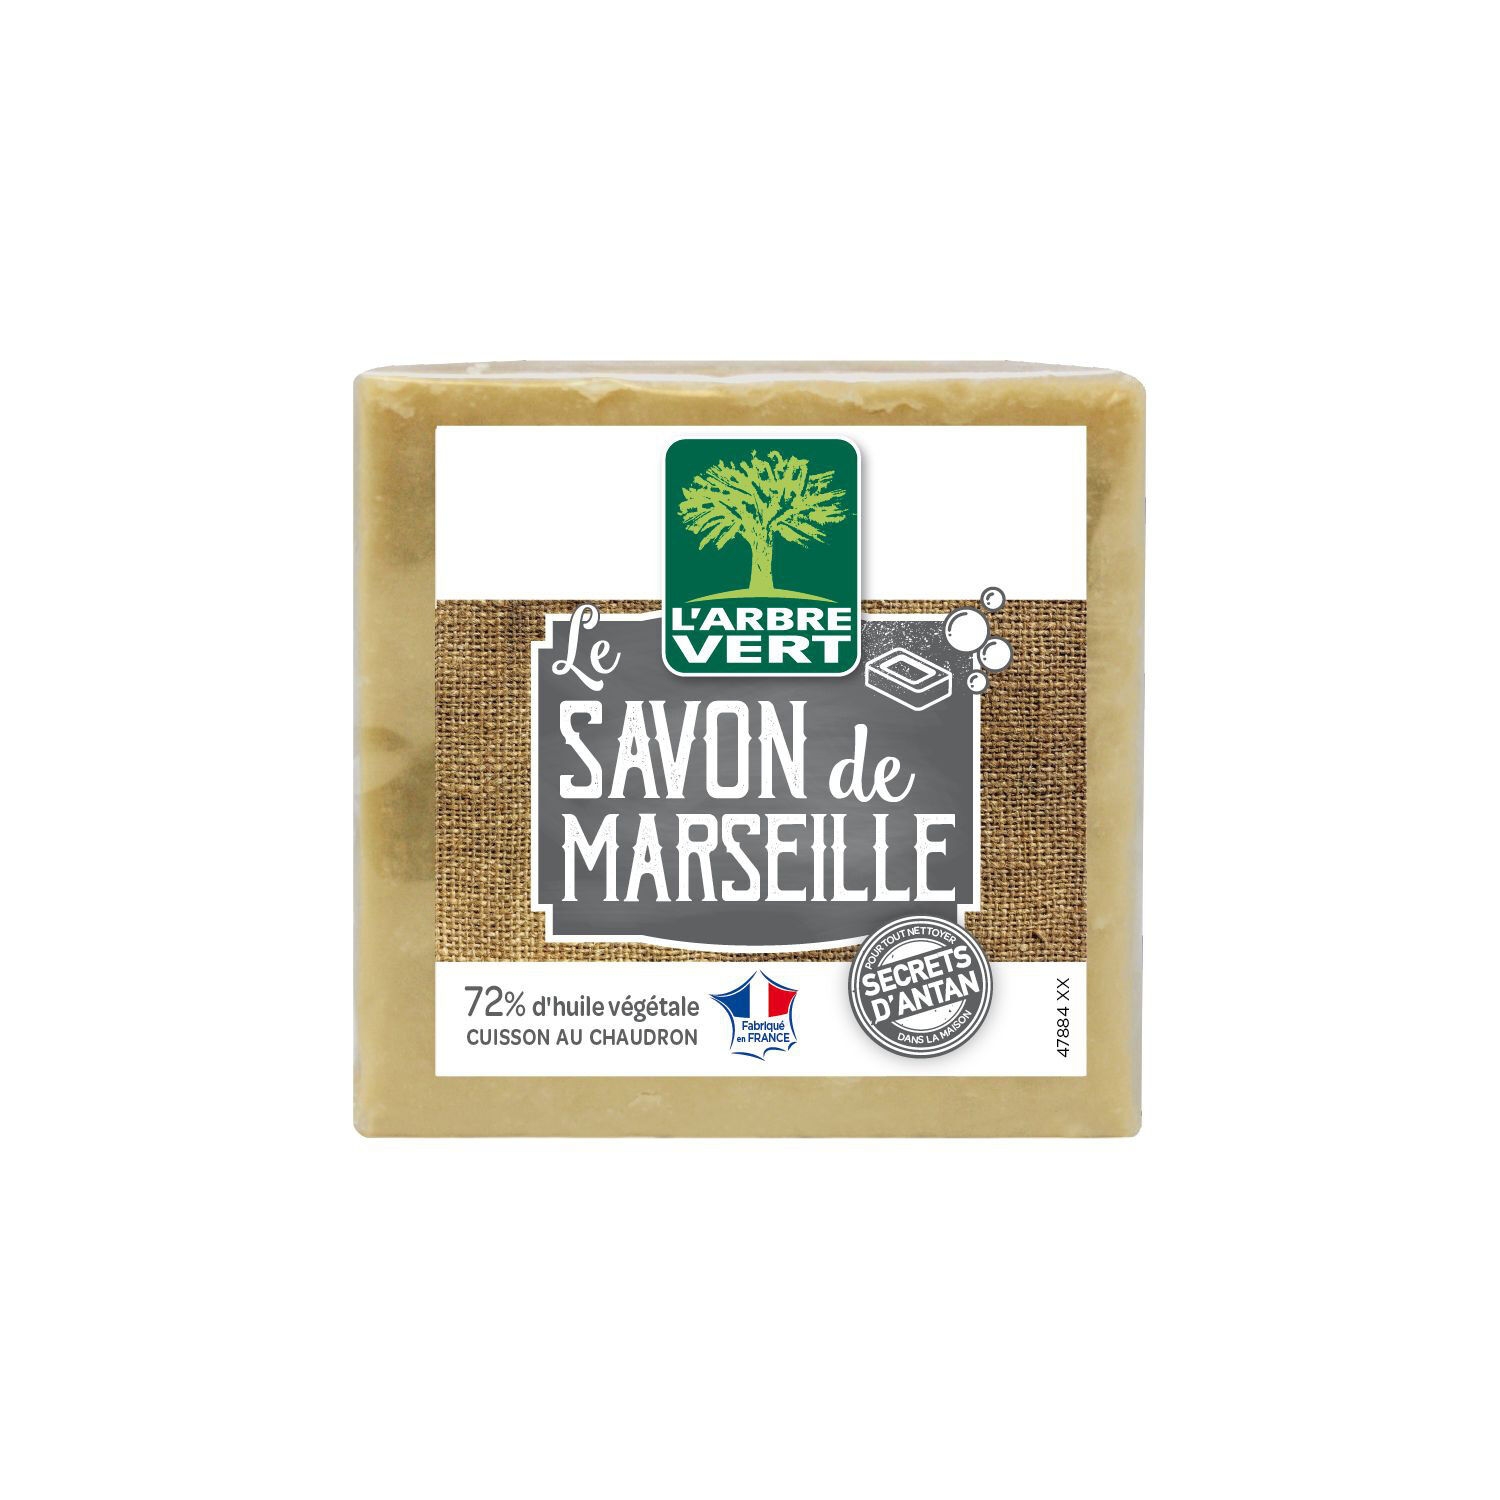 PERSAVON Savon de Marseille glycérine 200 g 4 Pièces - Lot de 2